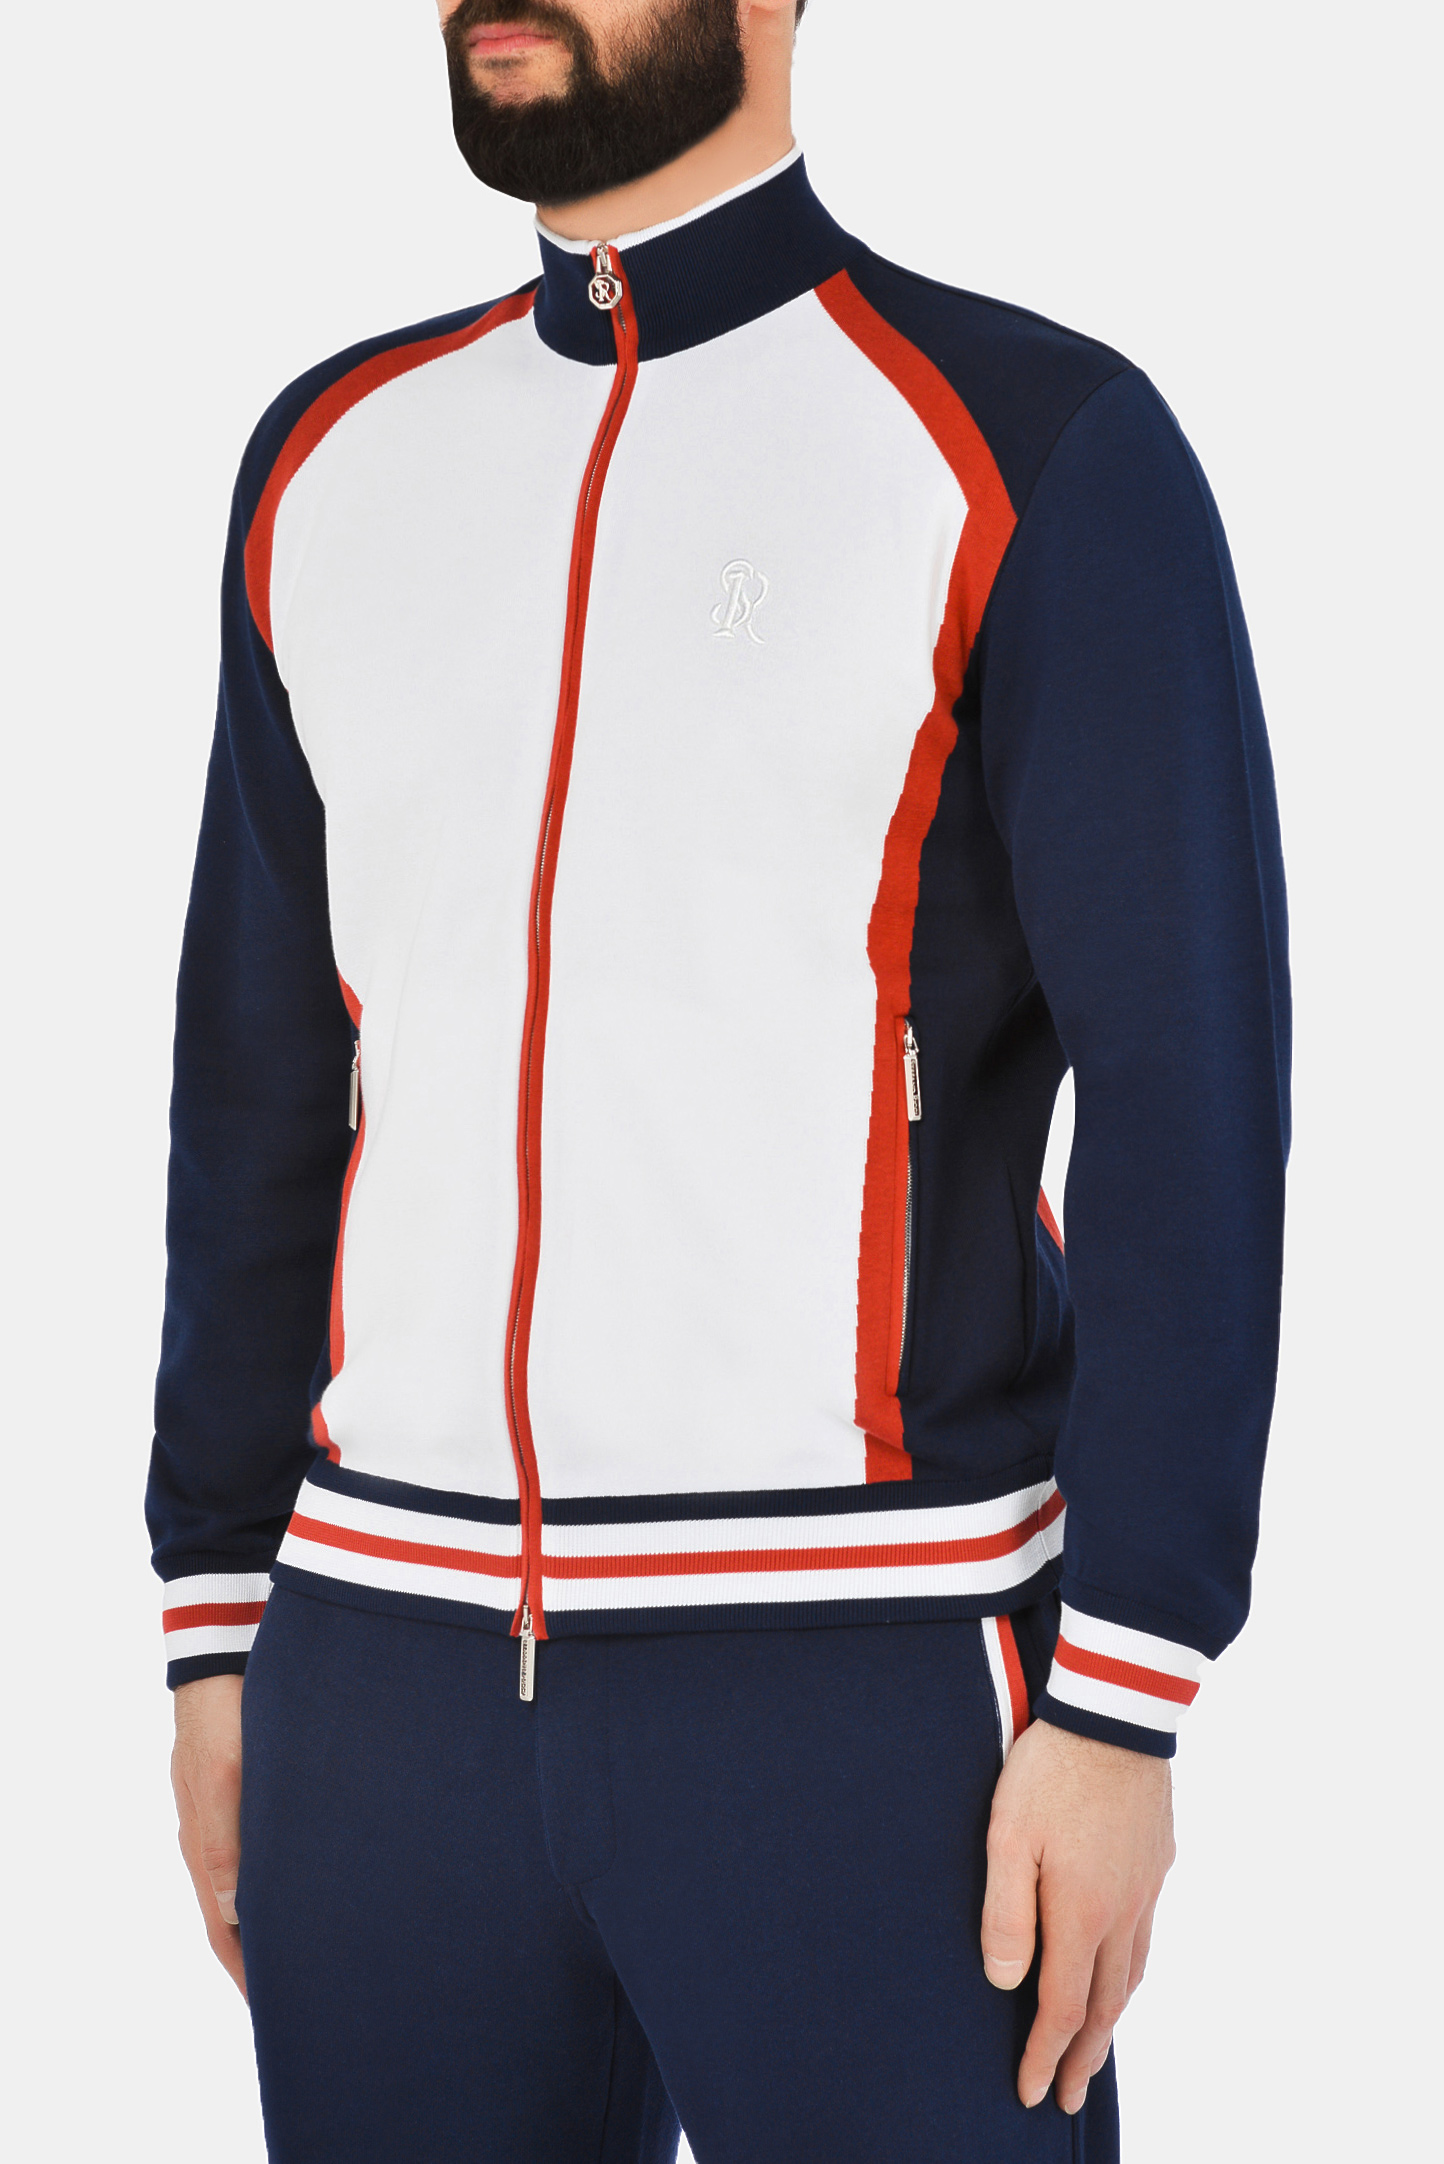 Куртка спорт STEFANO RICCI K616222R31 F21116, цвет: Белый, Мужской